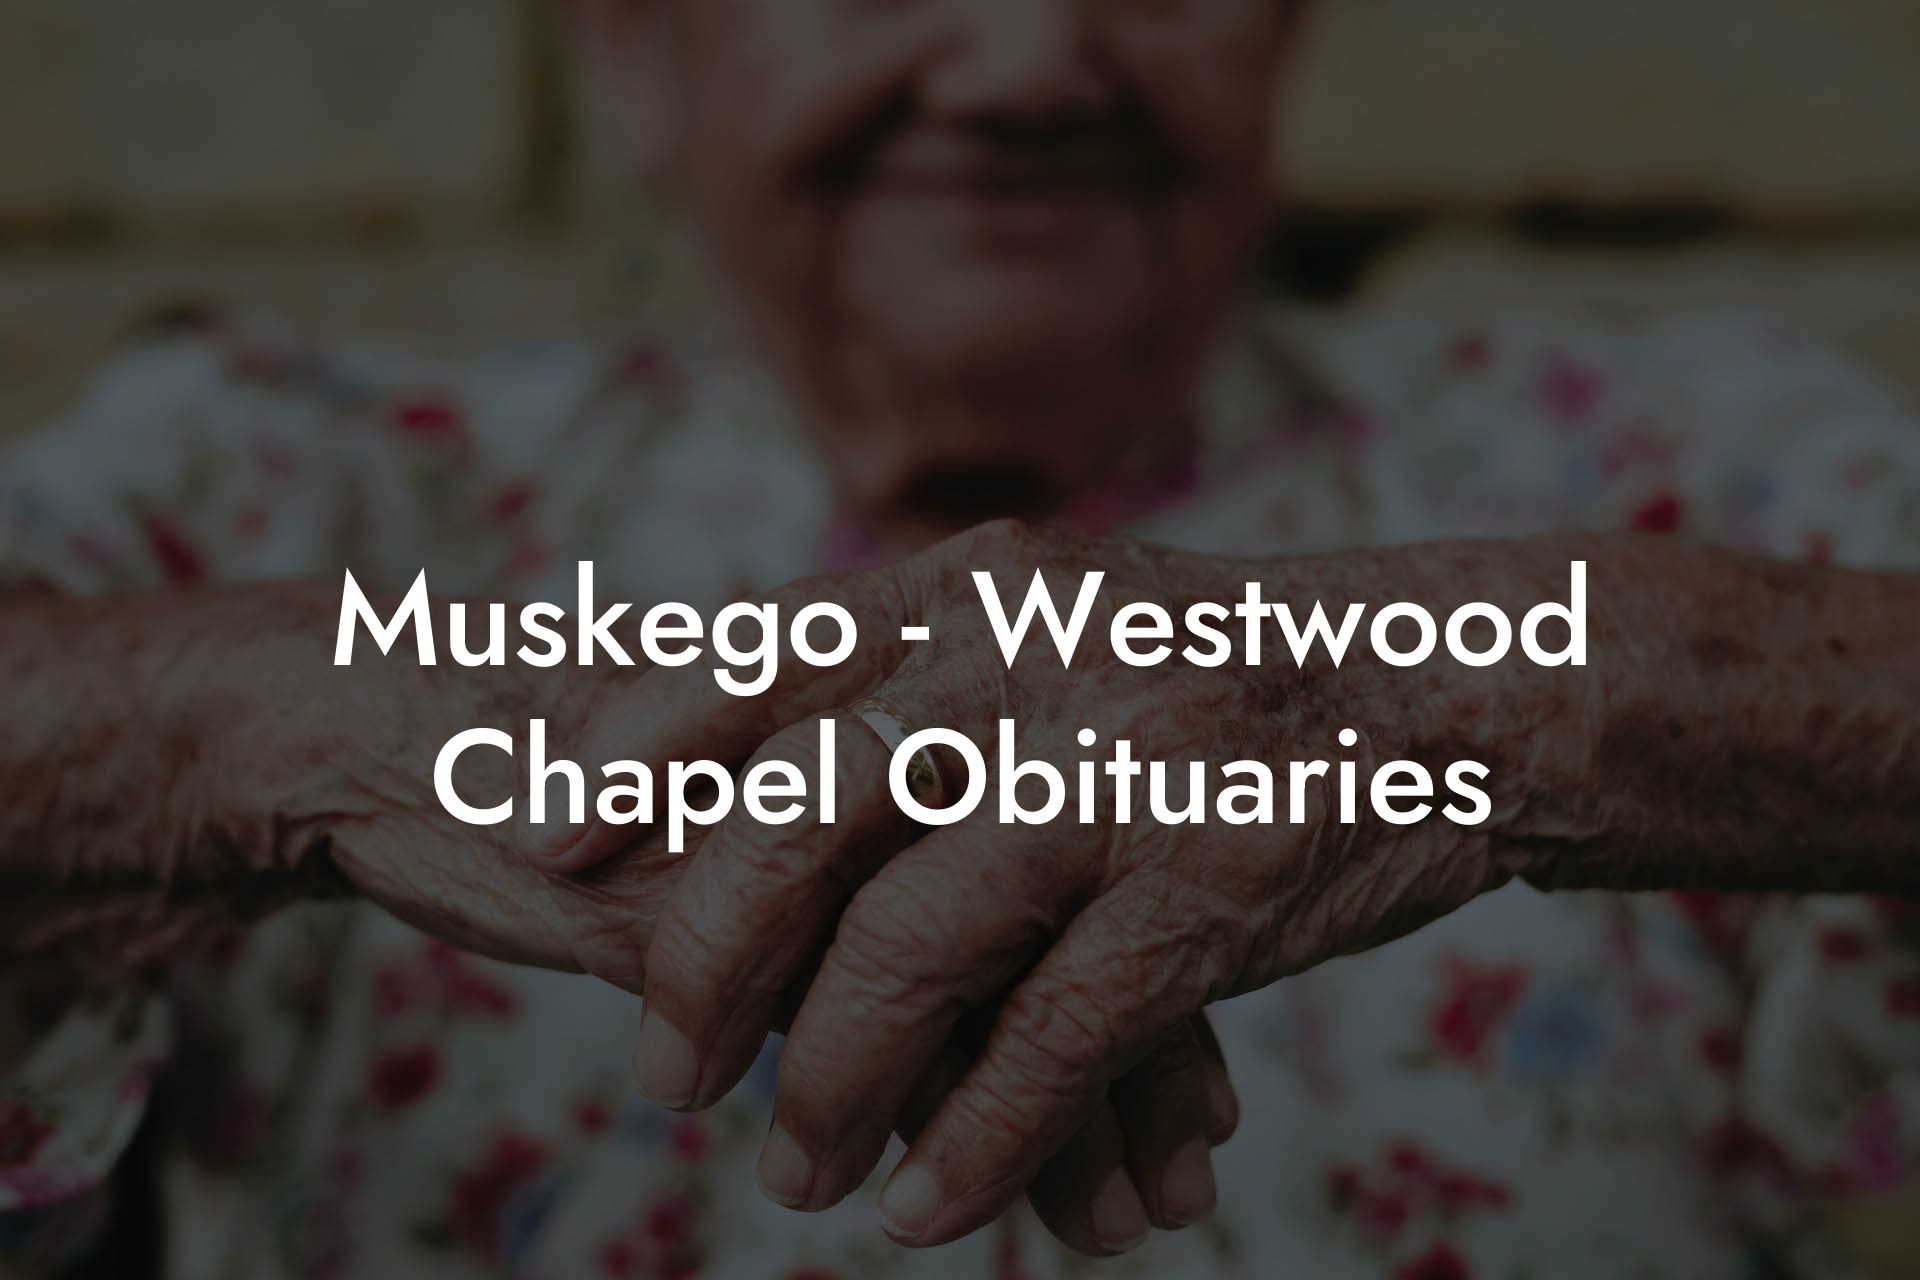 Muskego - Westwood Chapel Obituaries